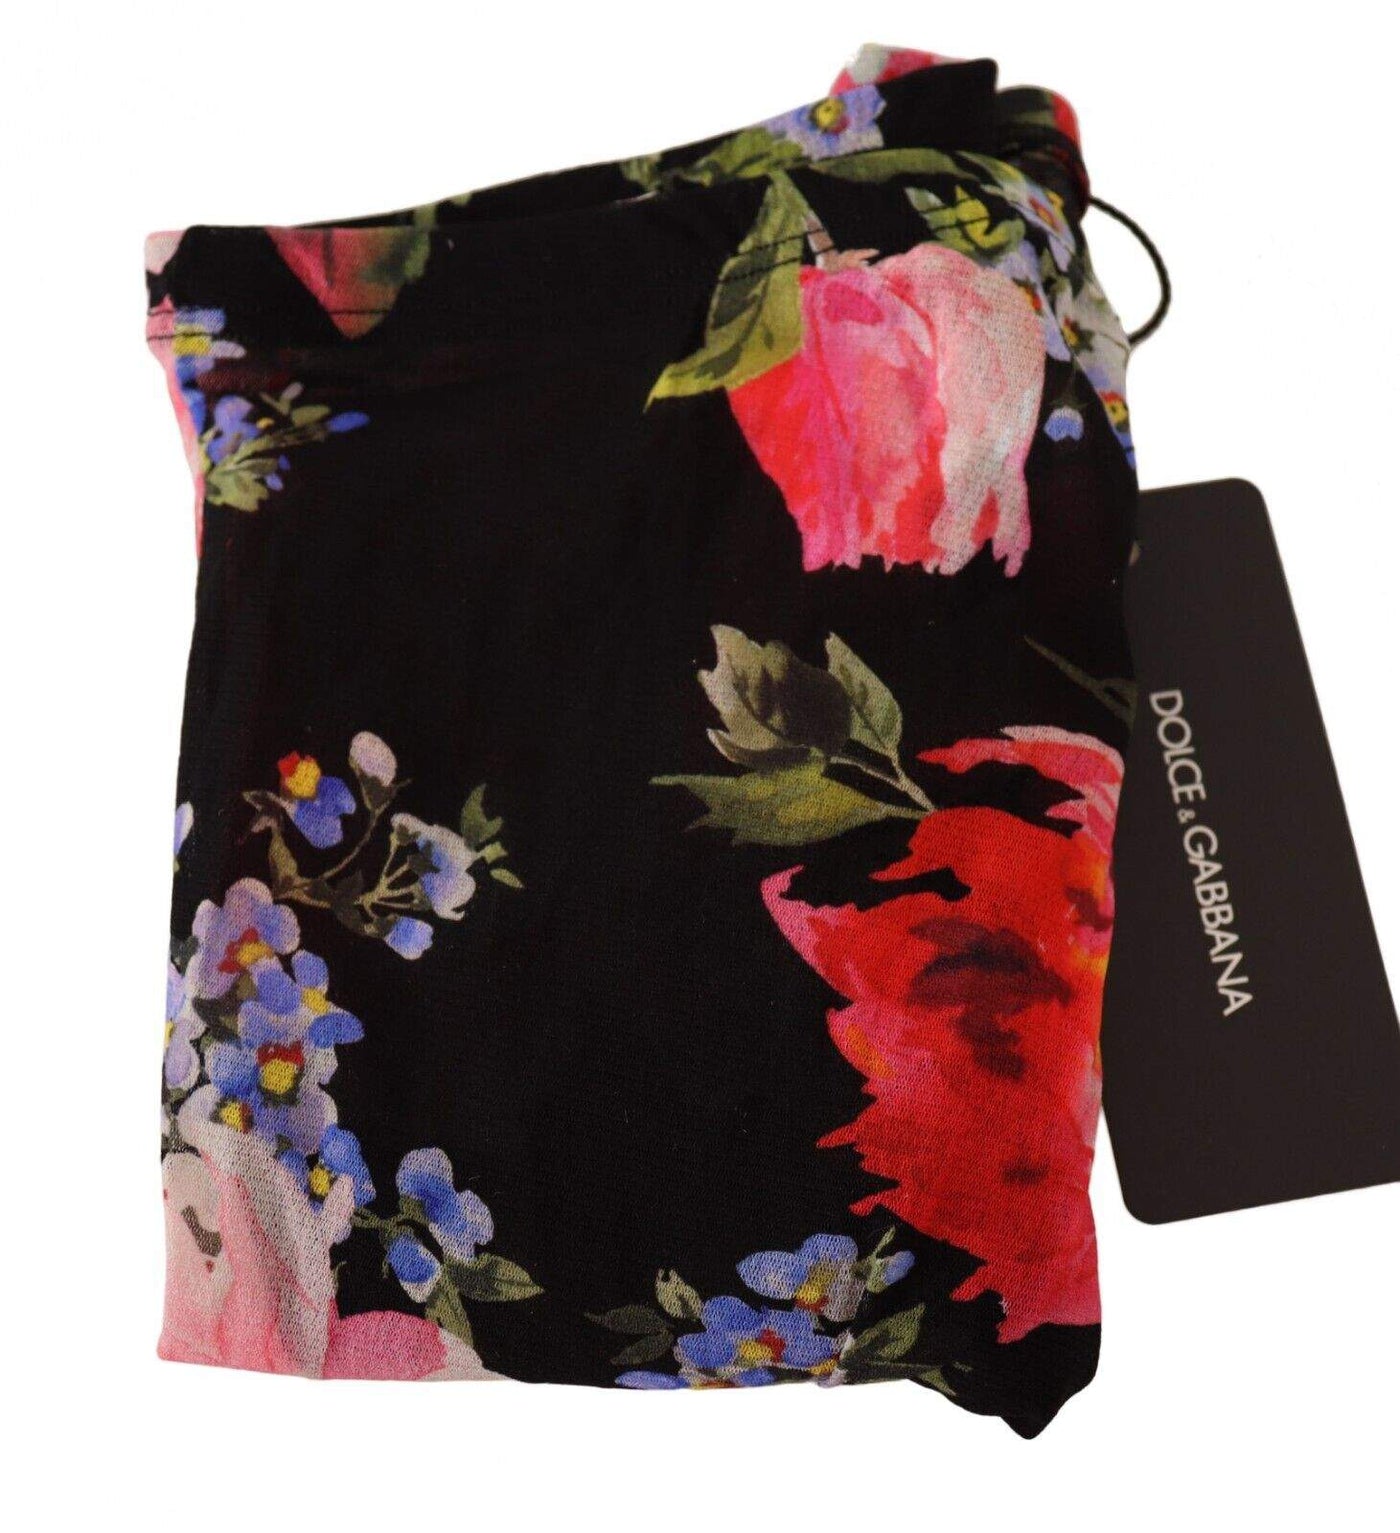 Dolce & Gabbana Black Floral Print Tights Nylon Stockings Black, Dolce & Gabbana, feed-1, M, Tights & Socks - Women - Clothing at SEYMAYKA